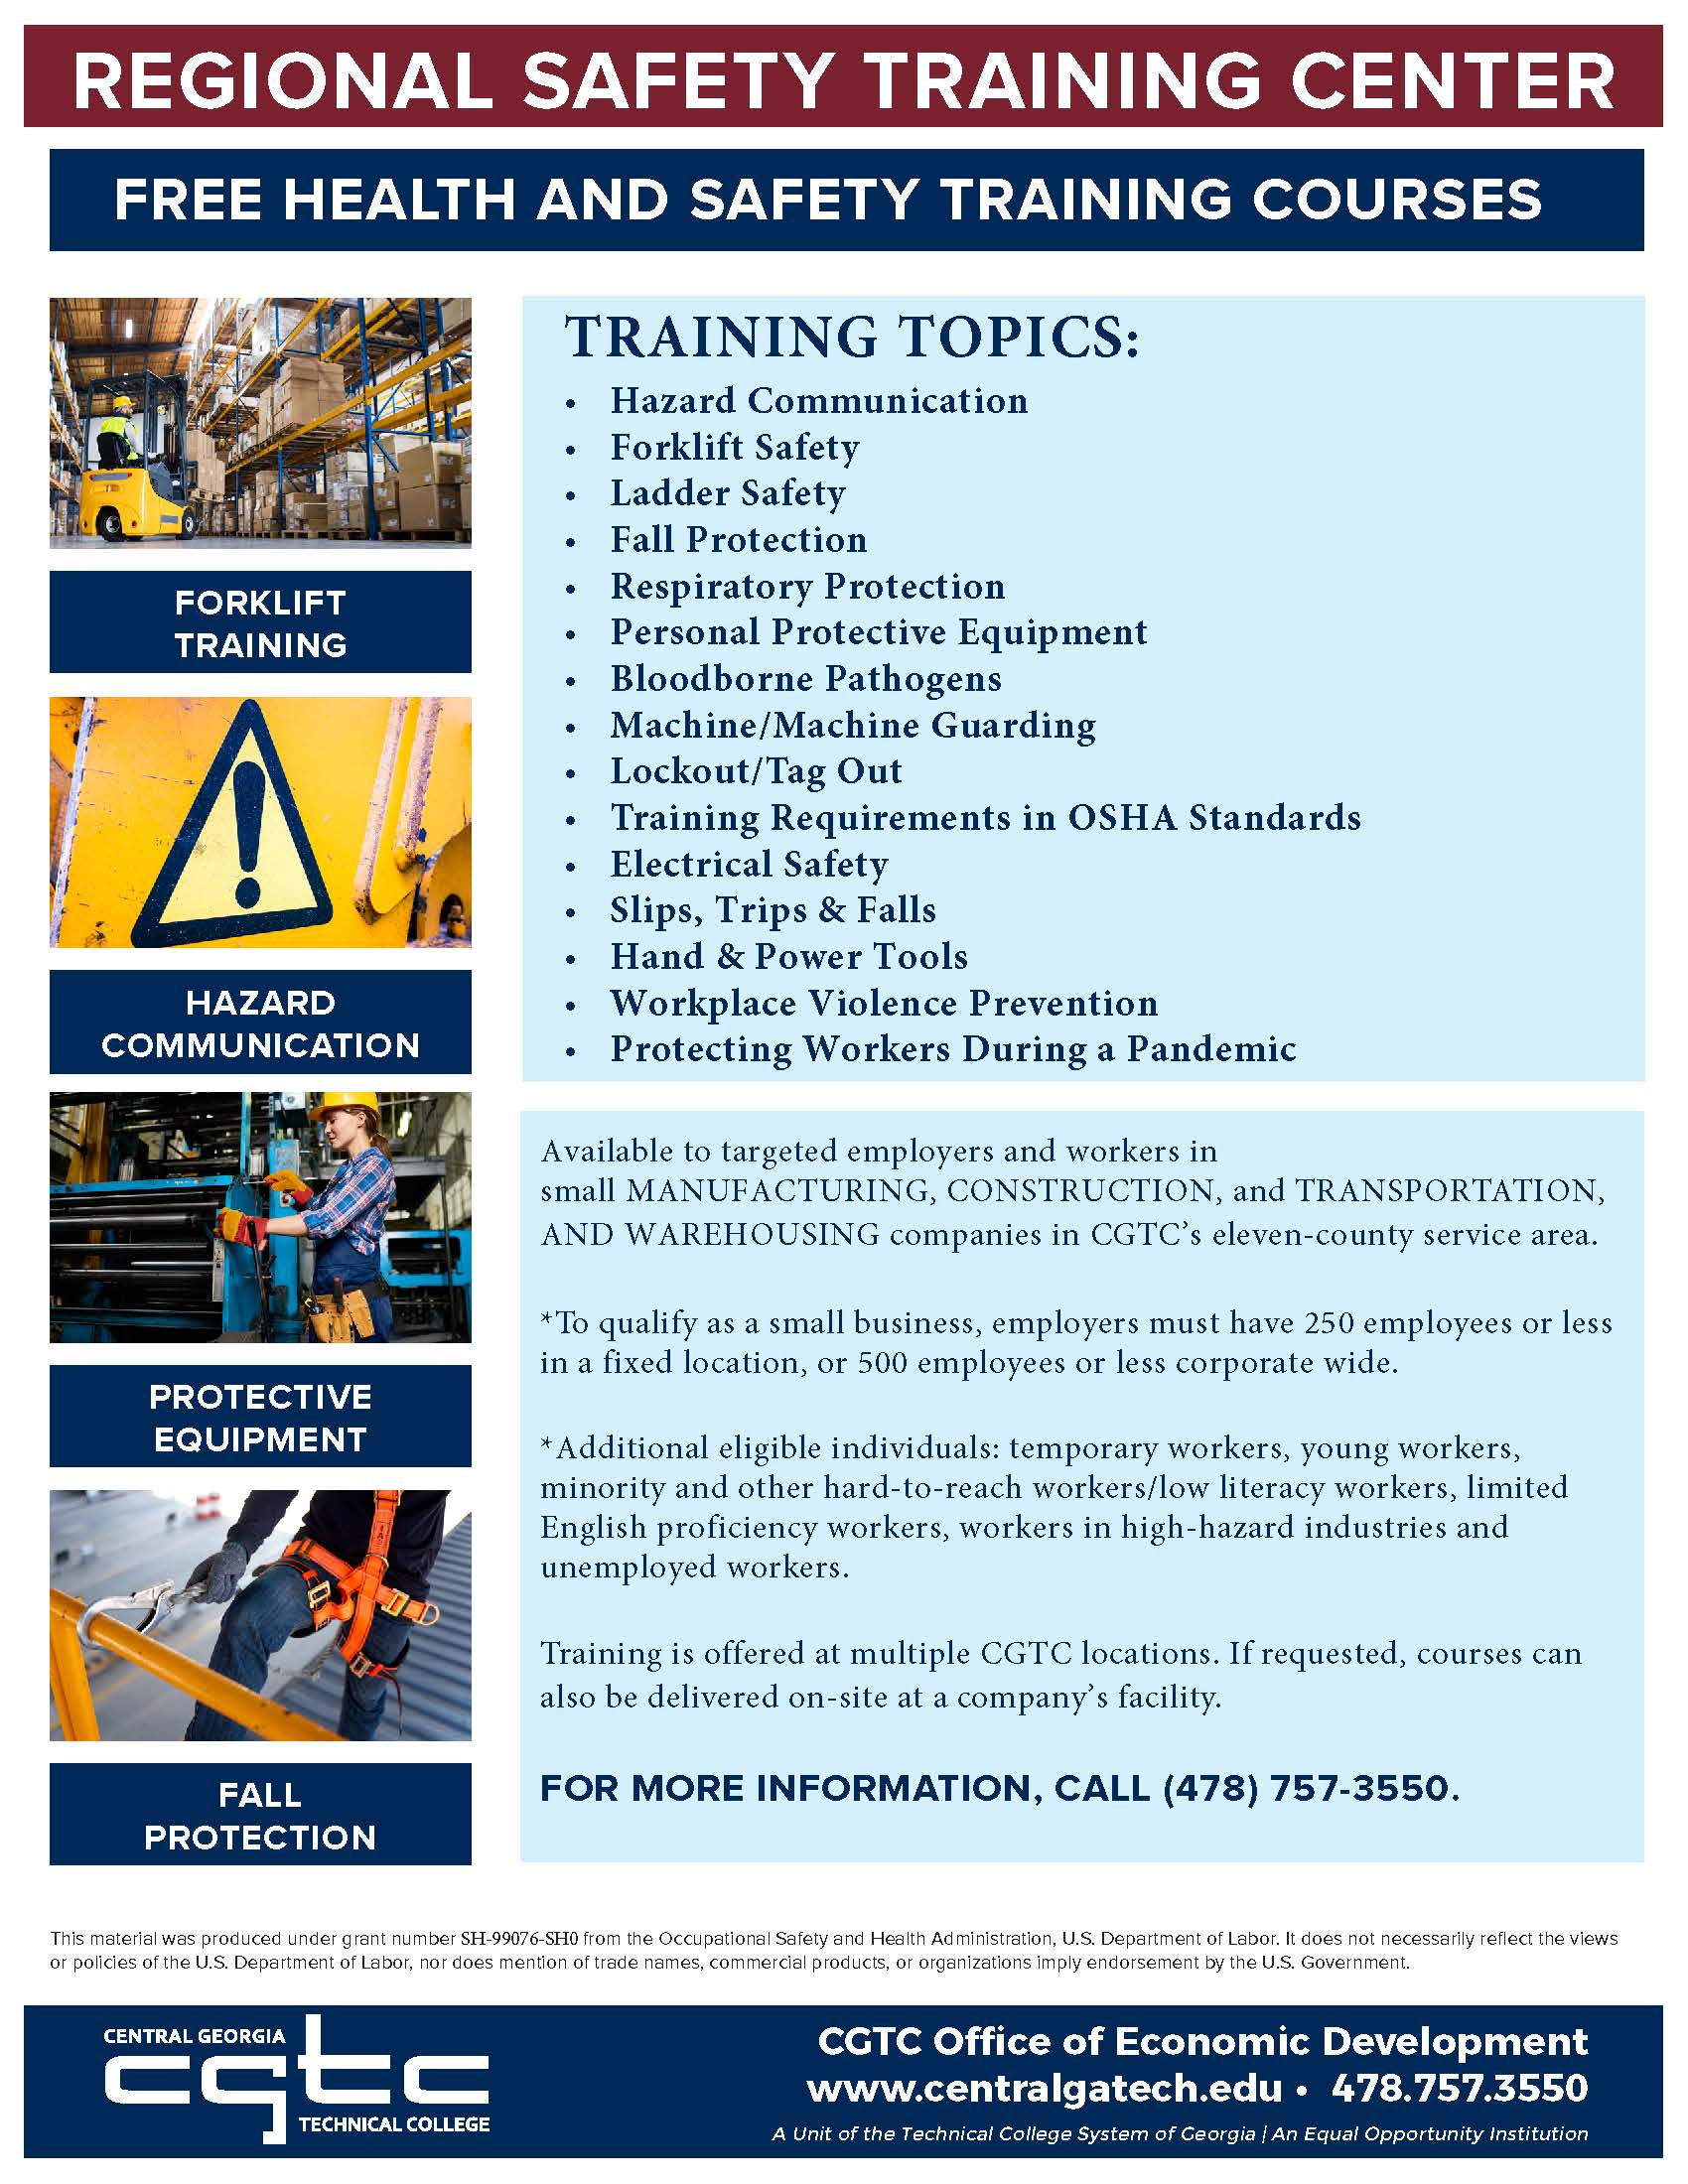 Regional Safety Training Center classes